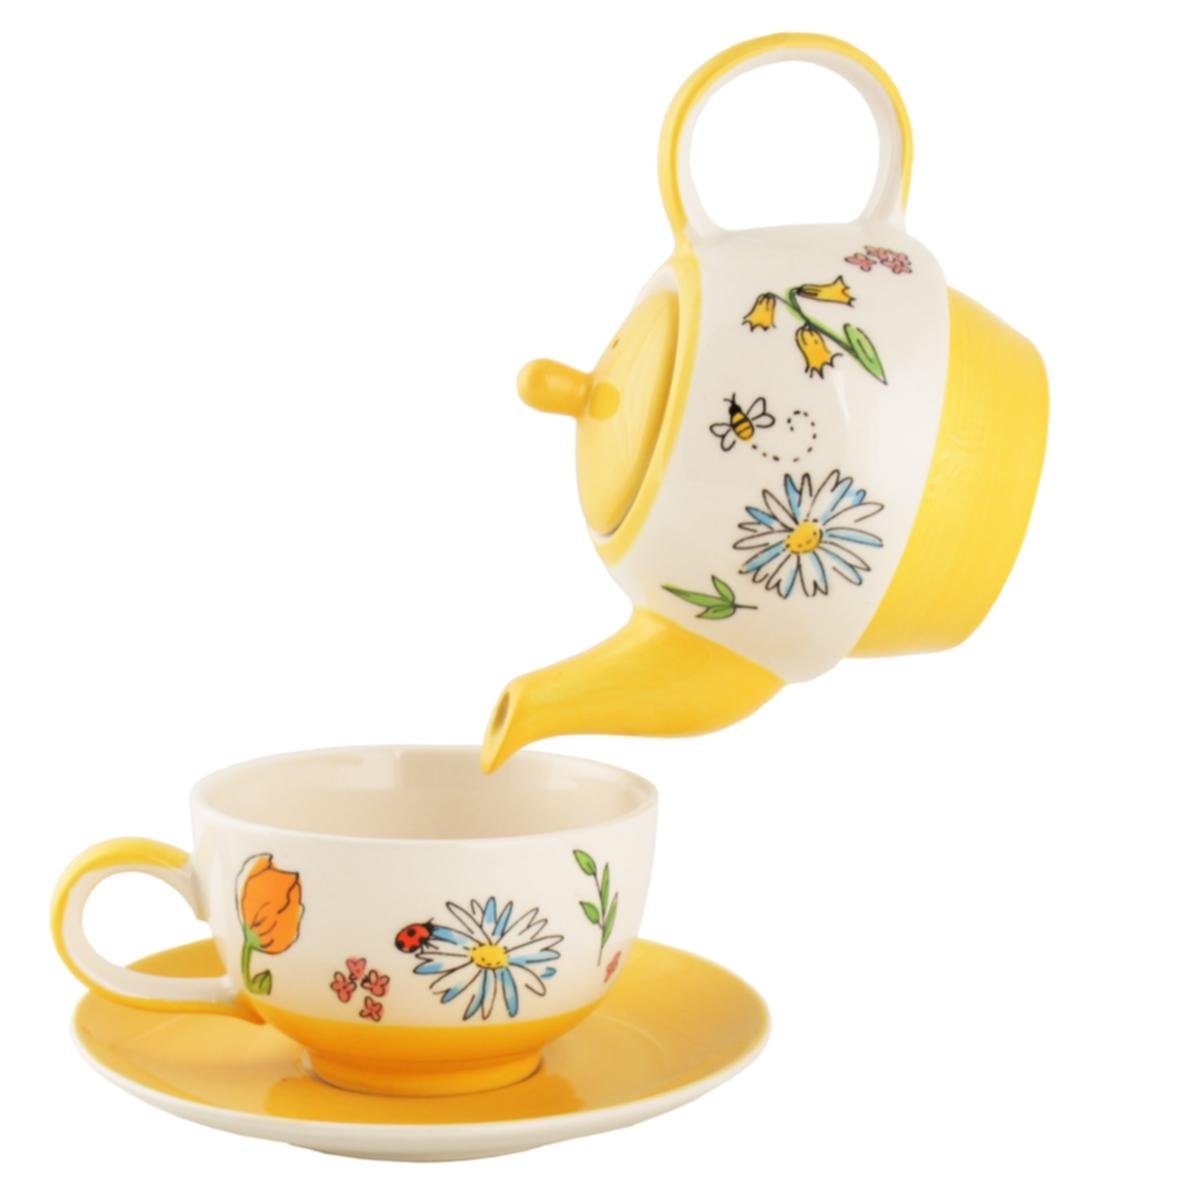 Mila Teekanne Mila Flowers, Tee-Set (Set) for Lovely Tea 0.4 Keramik l, One